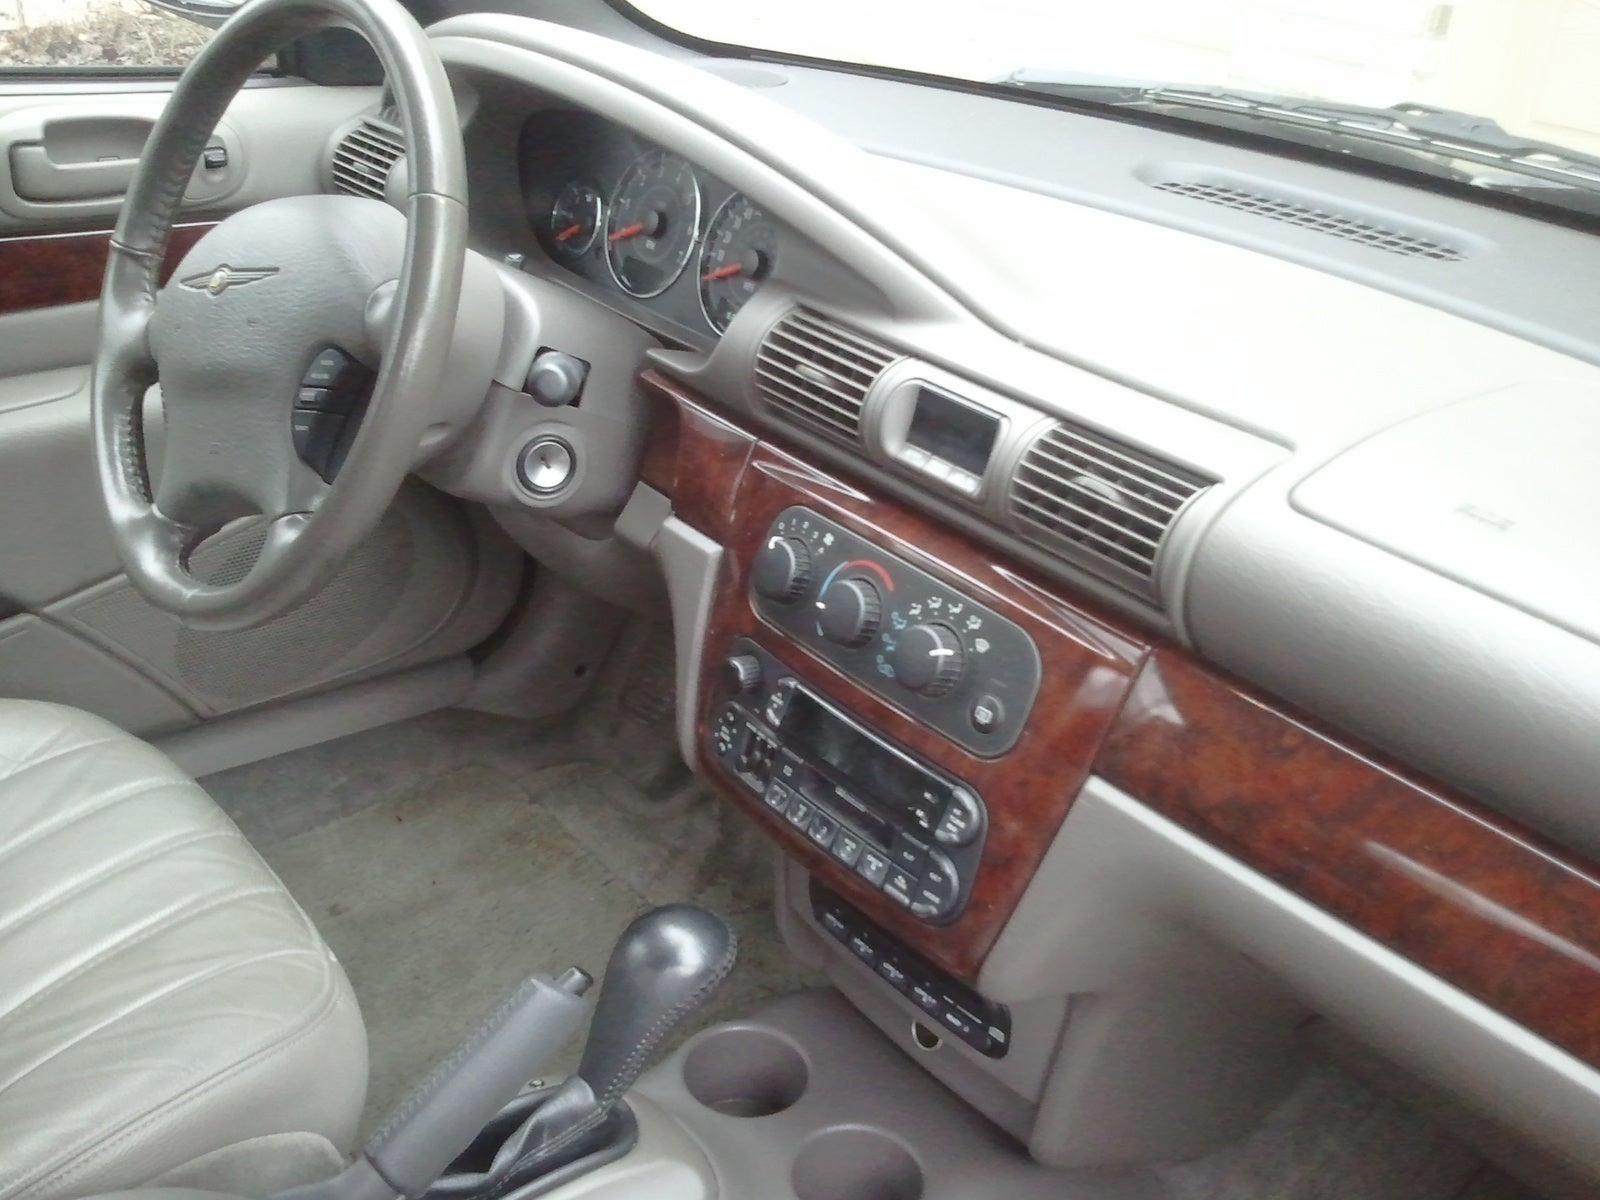 2002 Chrysler sebring interior colors #1